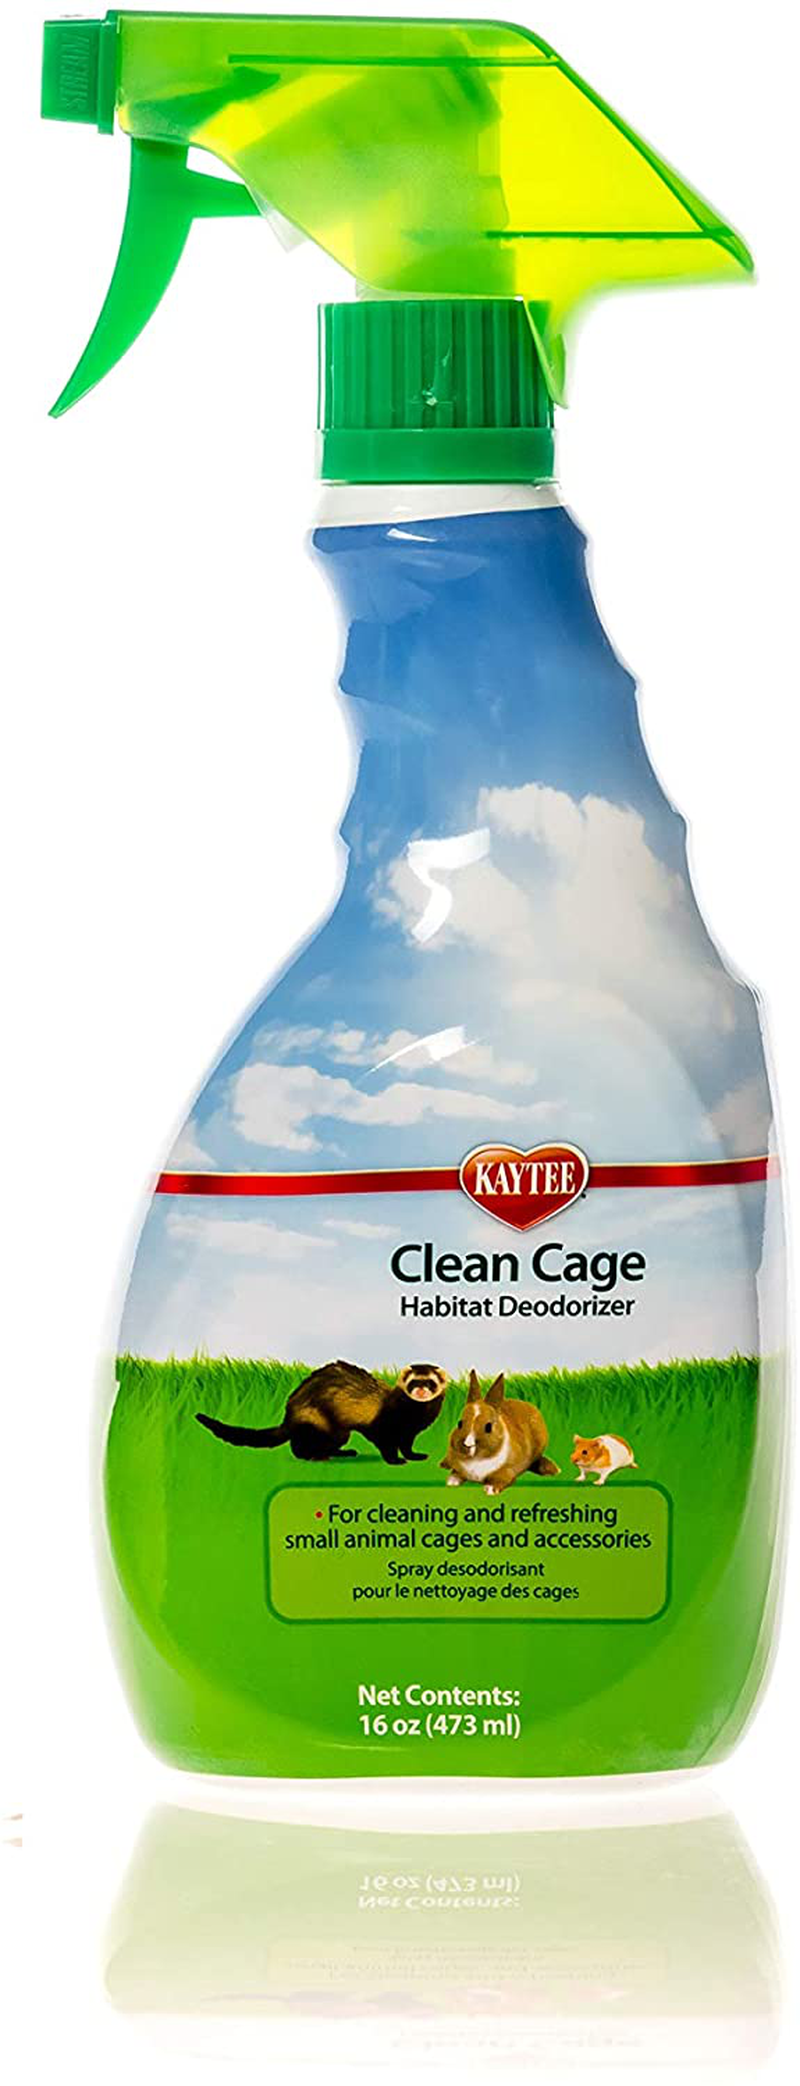 Kaytee Clean Cage Habitat Deodorizer Spray